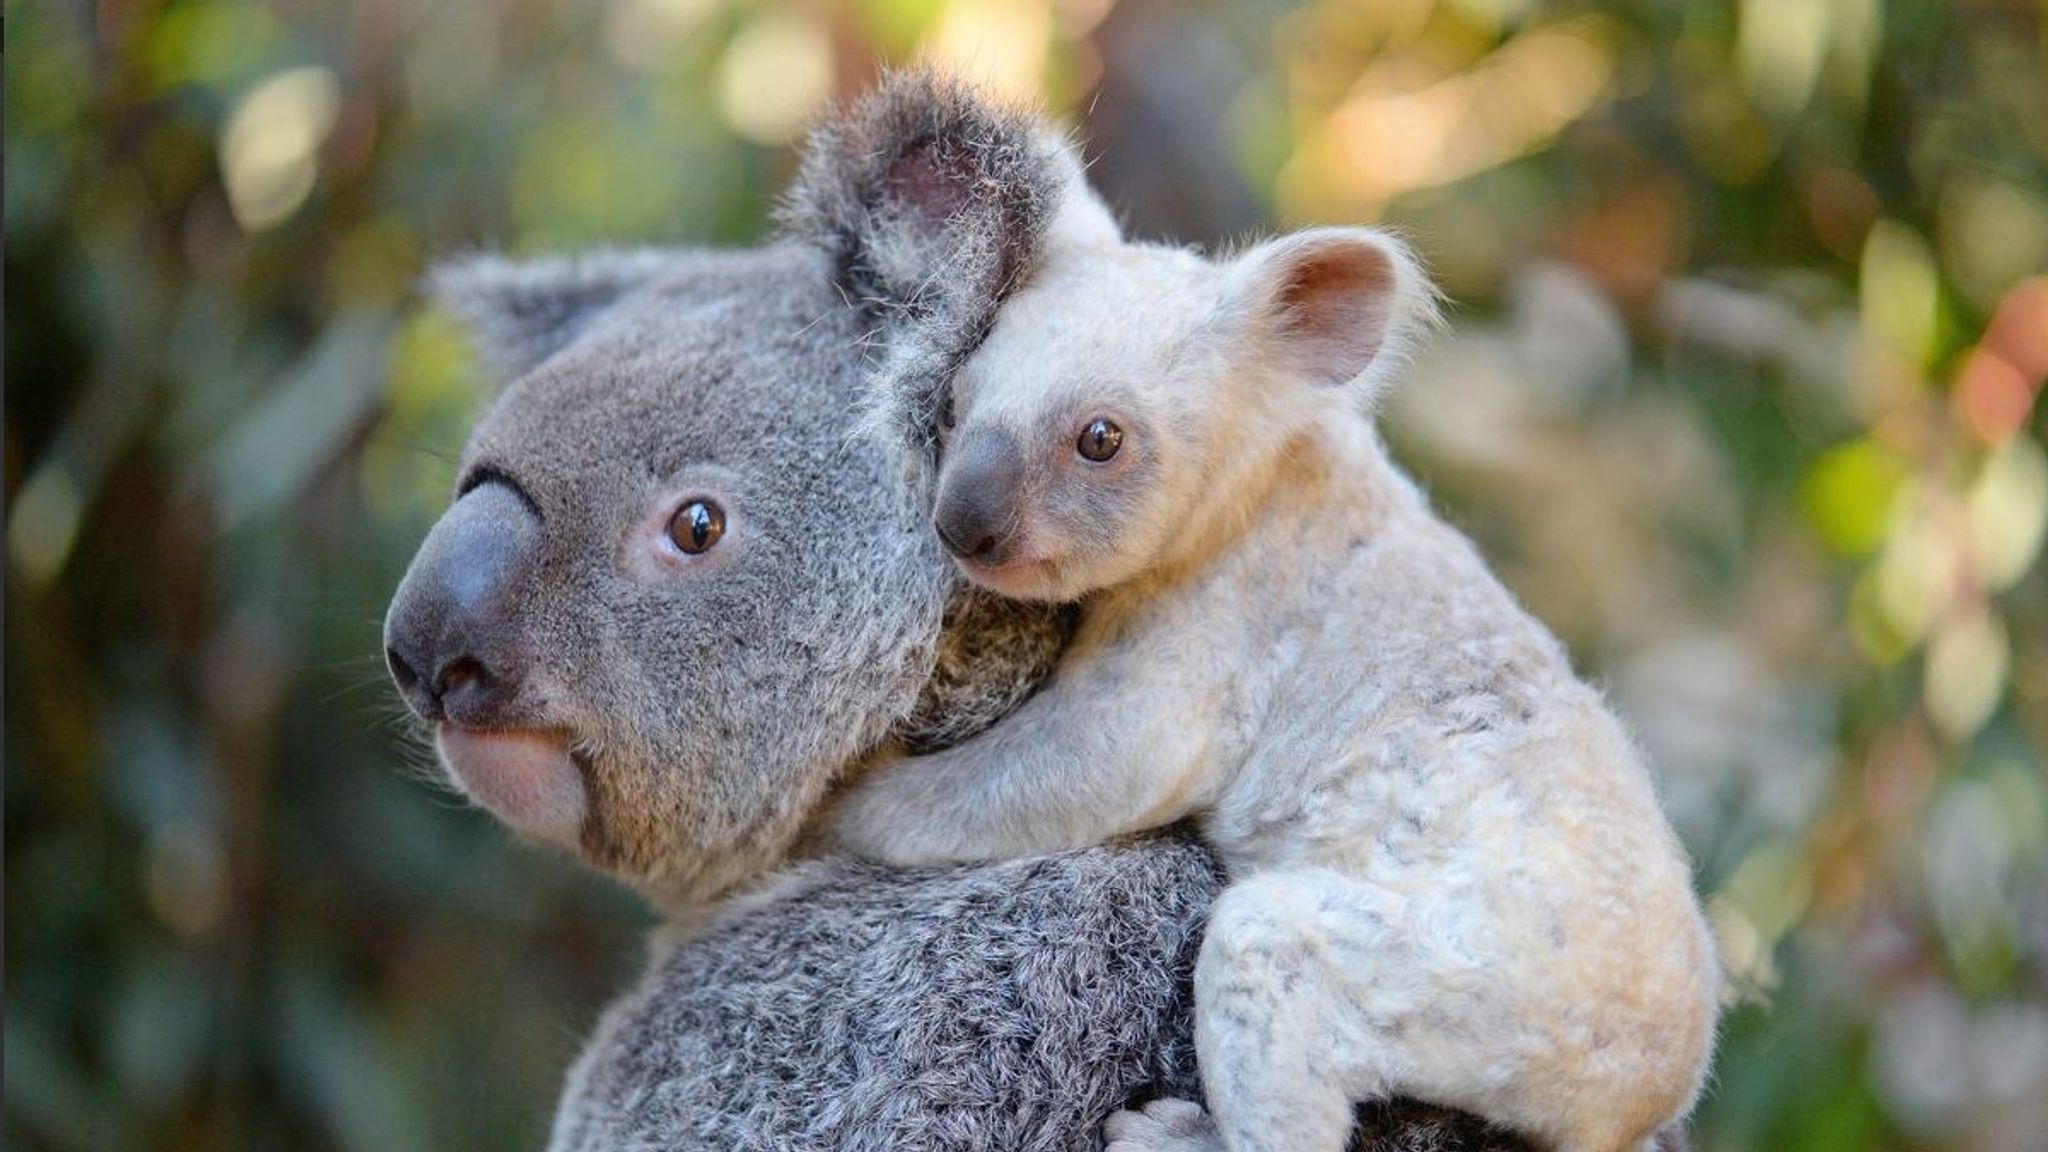 Qualities of Baby Koalas